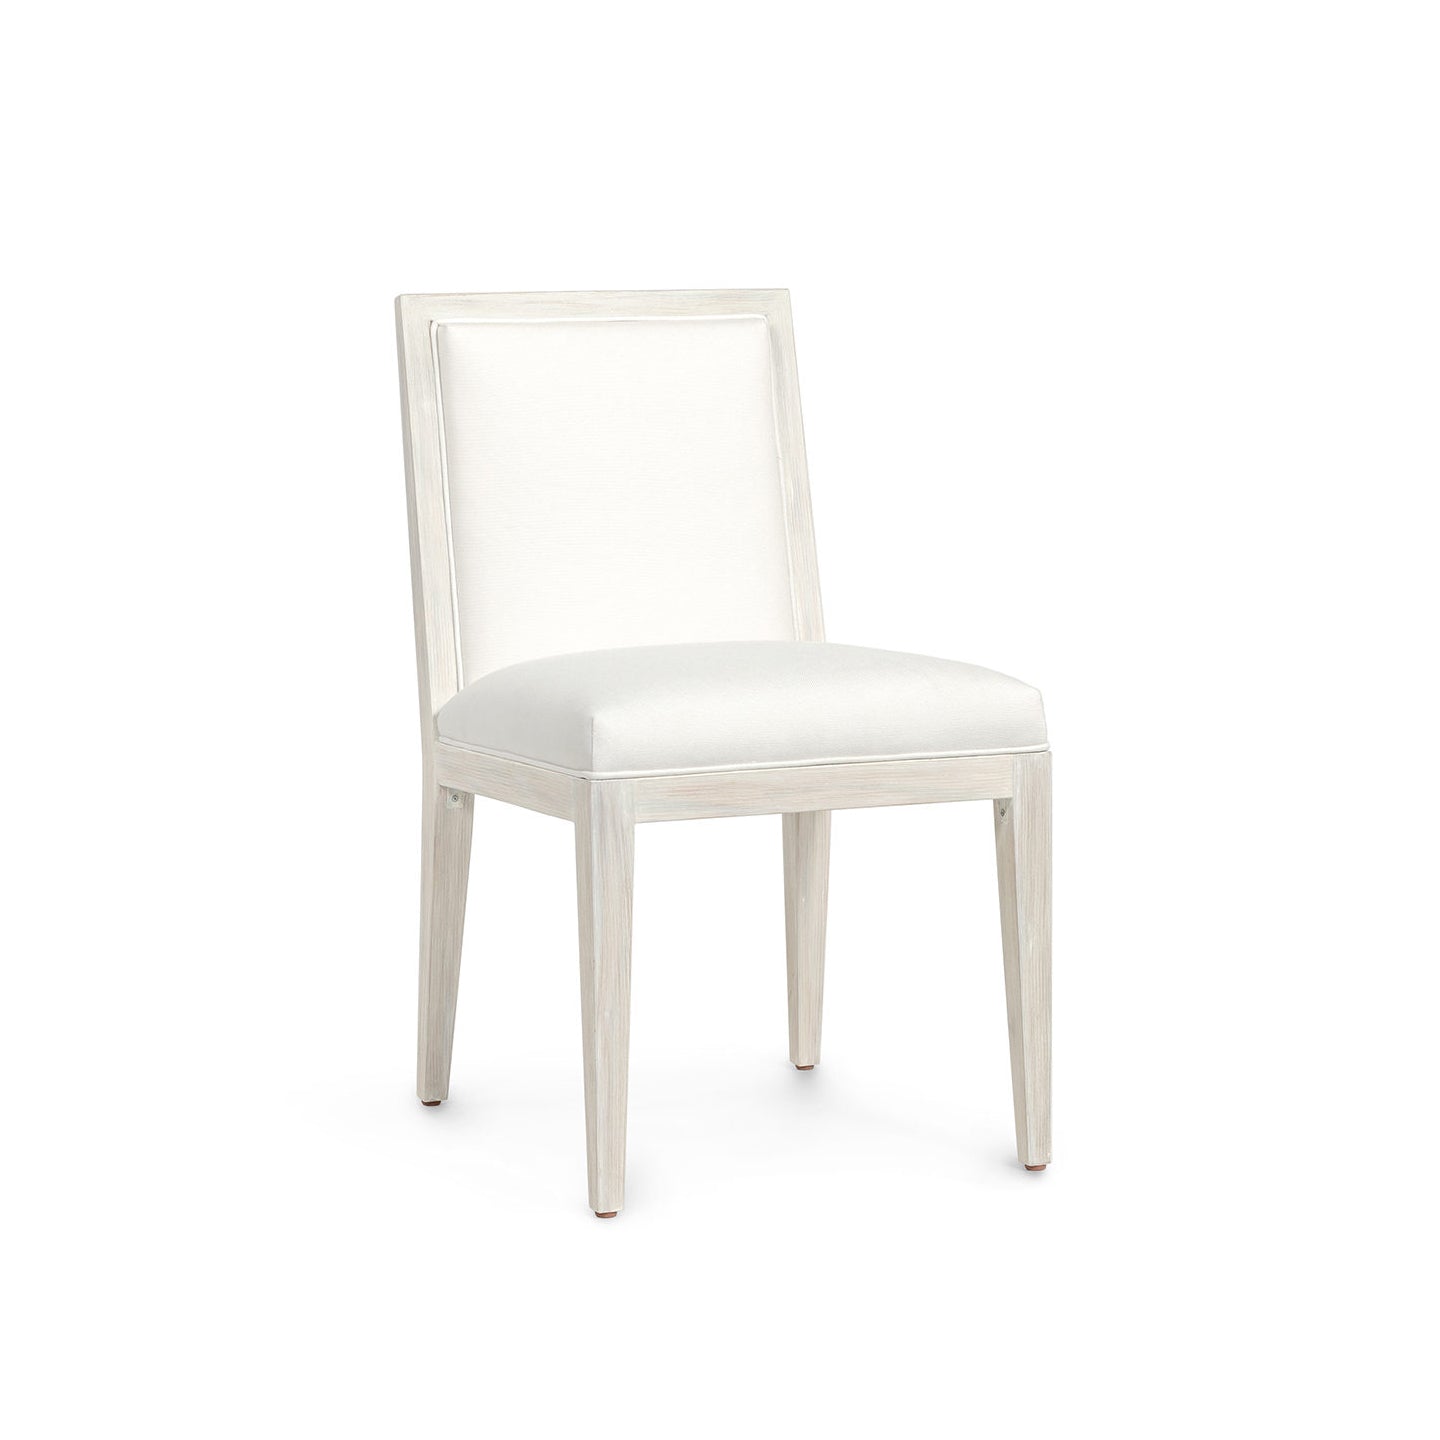 Santa Barbara Side Chair, White Sand